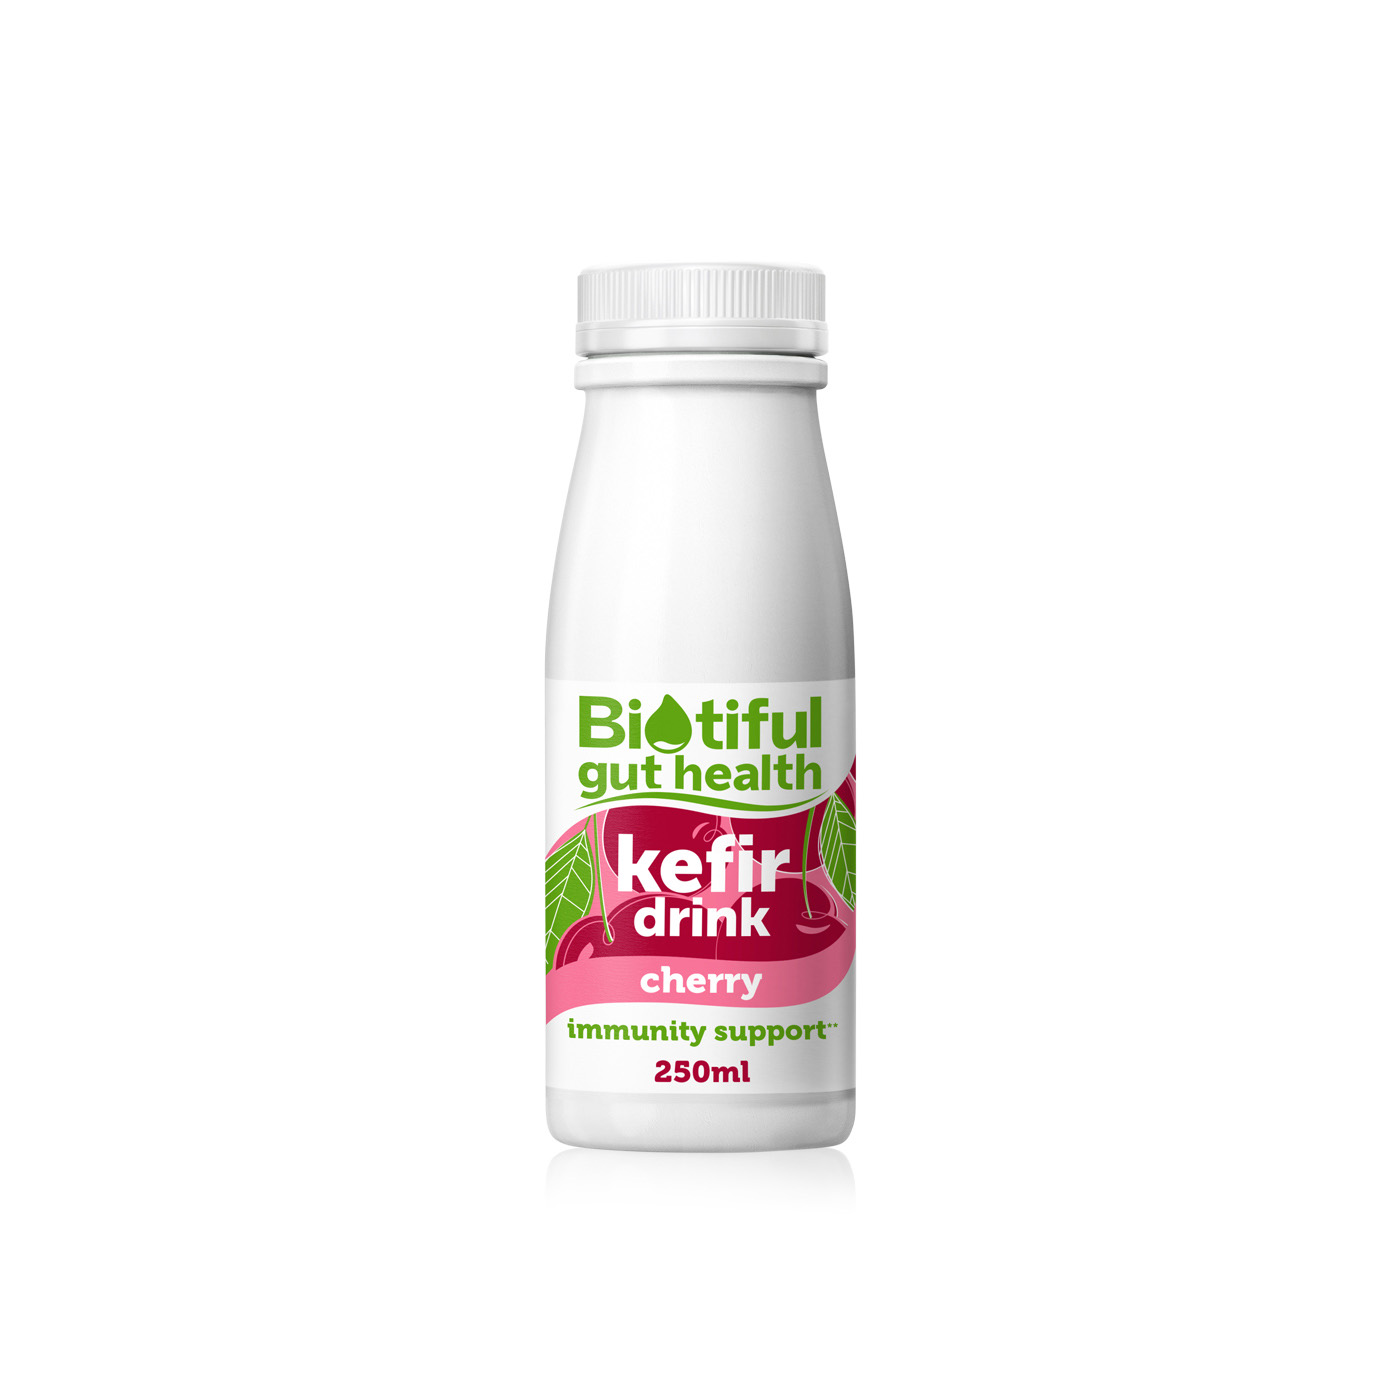 Biotiful Dairy morello cherry kefir 250ml - Spinneys UAE